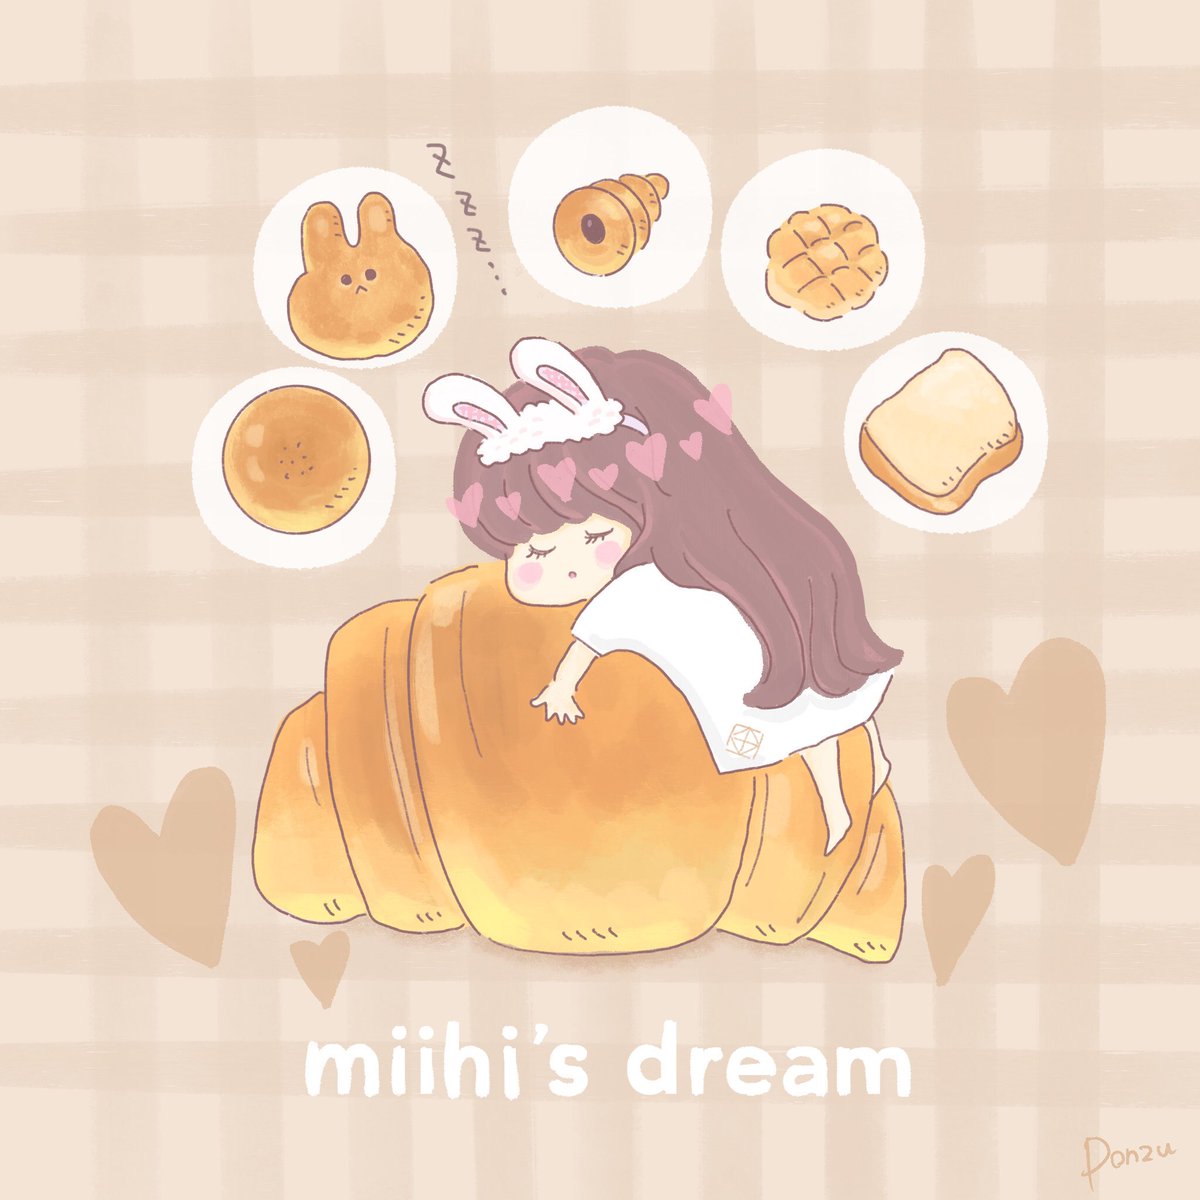 Ponzu Miihi S Dream 少女はパンの夢を見る 描きましたっ Niziu Niziufanart ミイヒ みいひ イラスト パンいっぱい食べてね